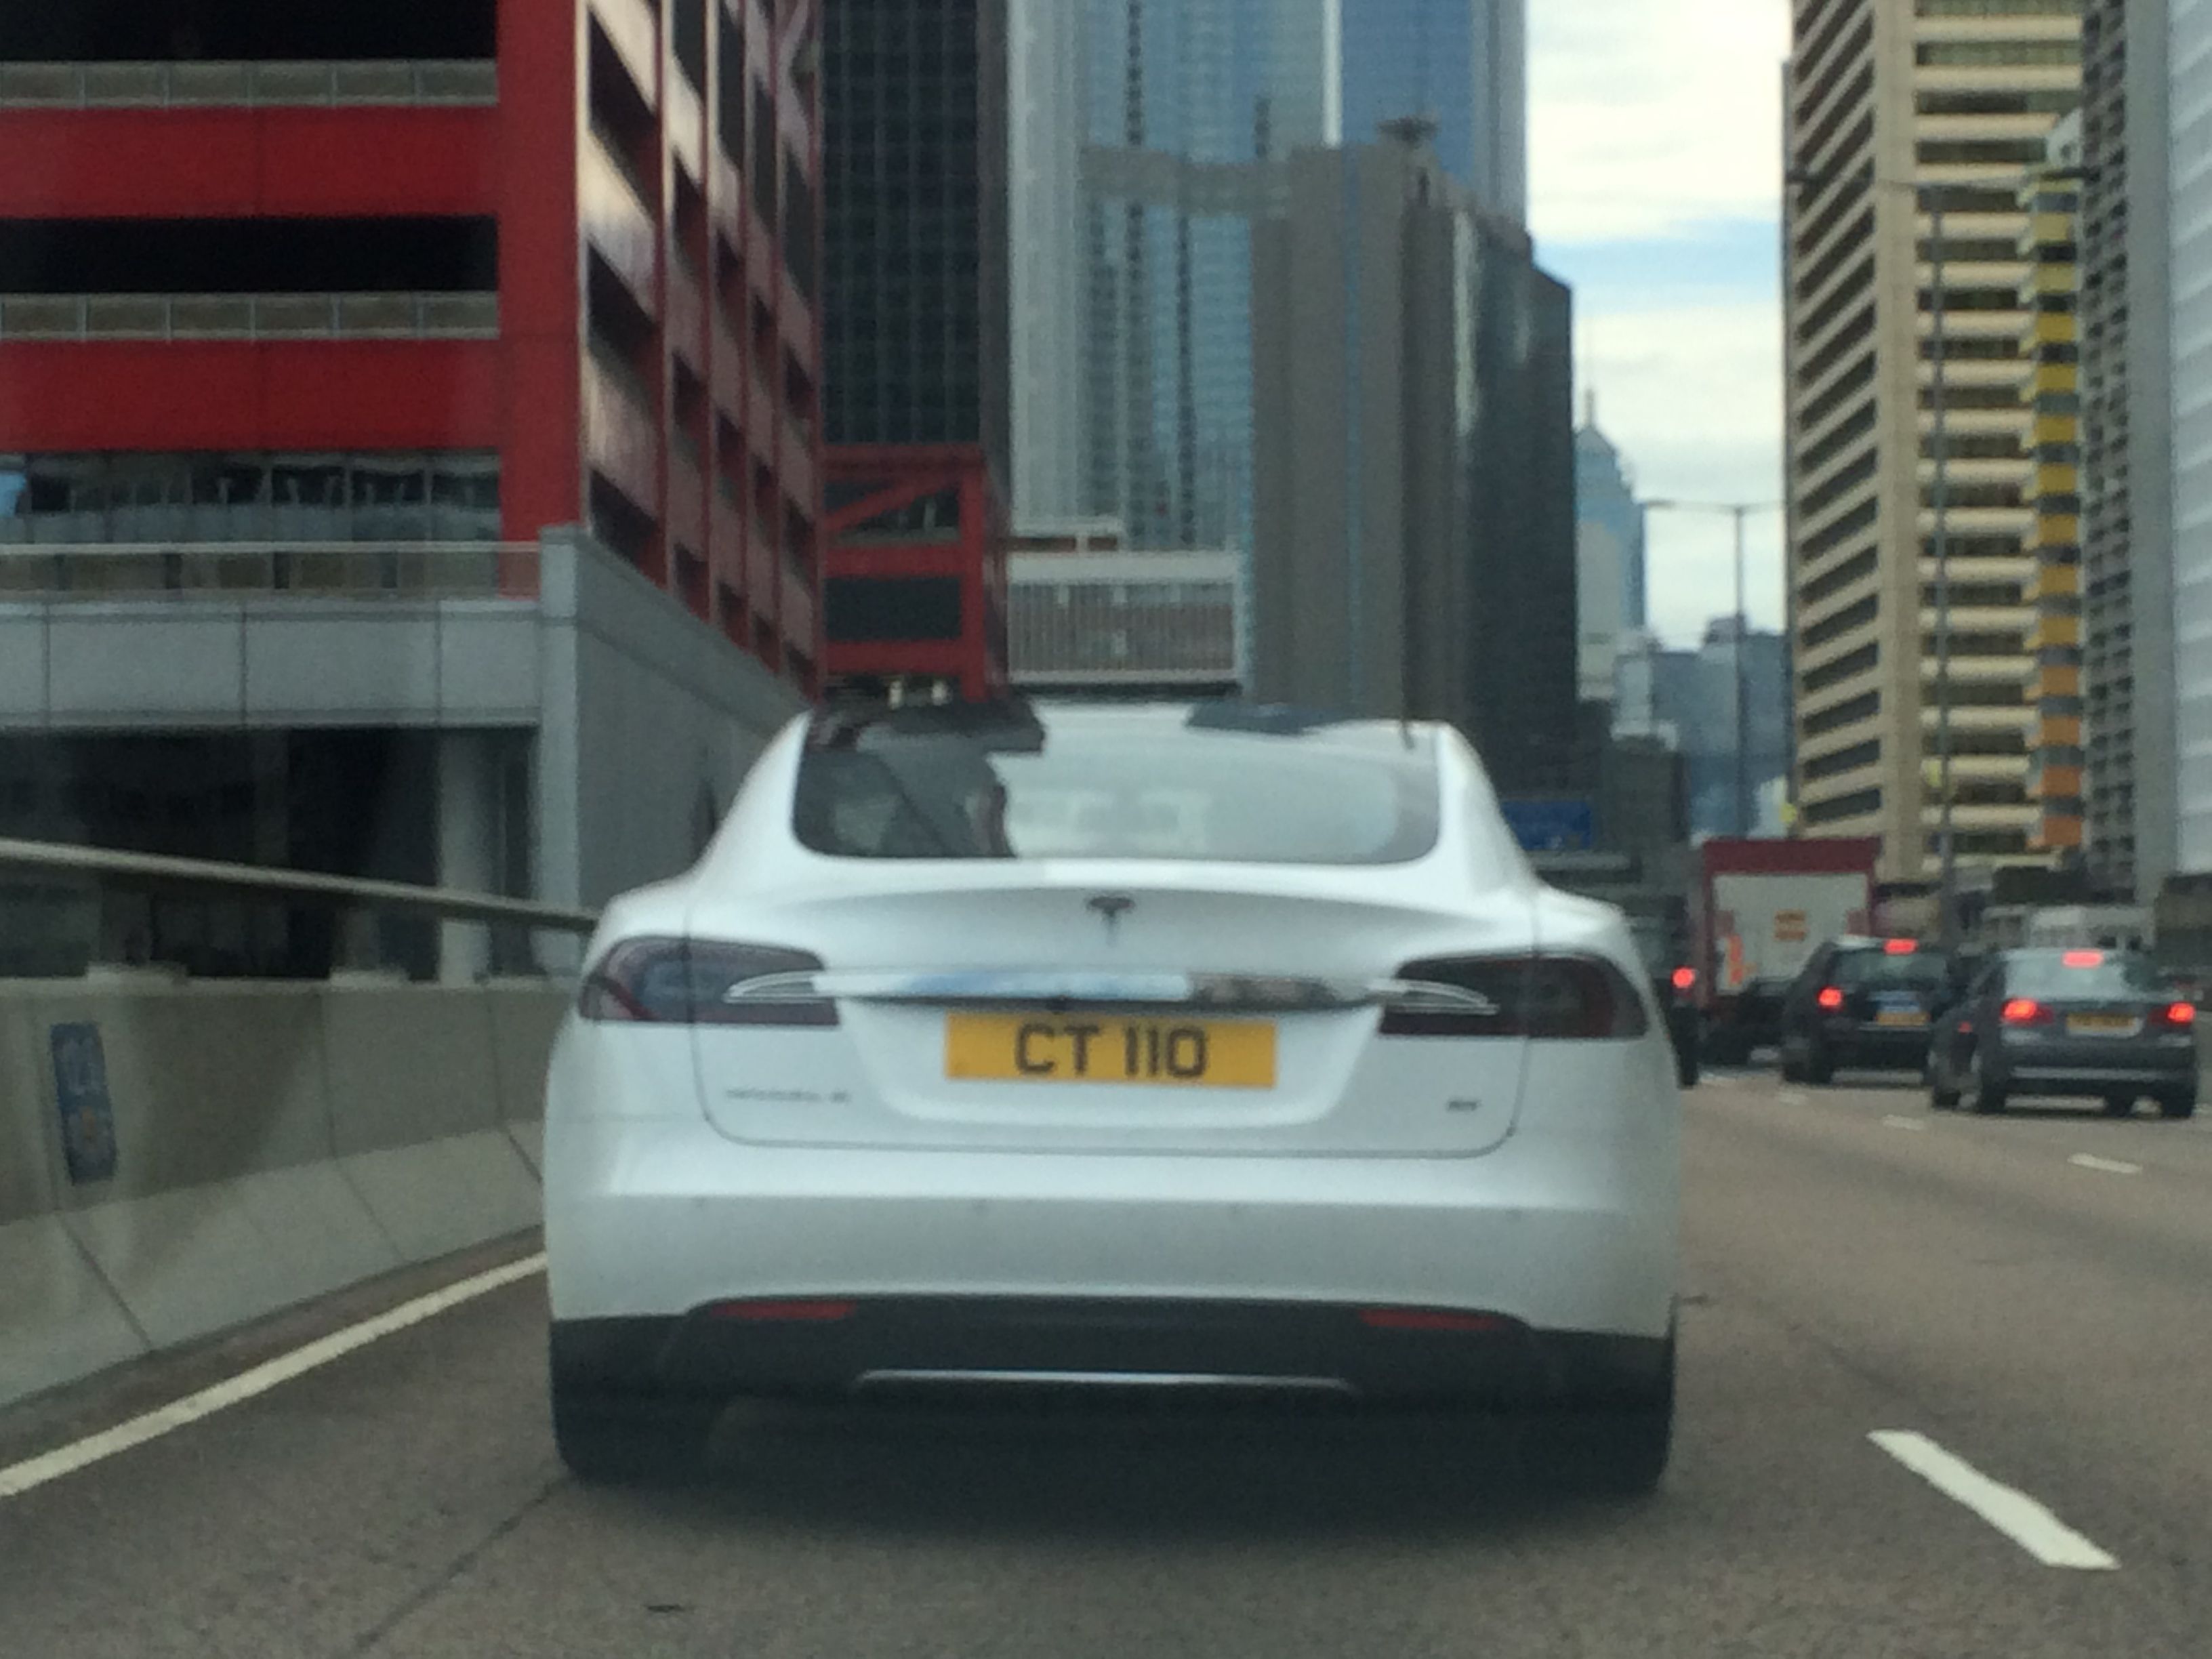 Tesla Model S Sighting CT110.jpg